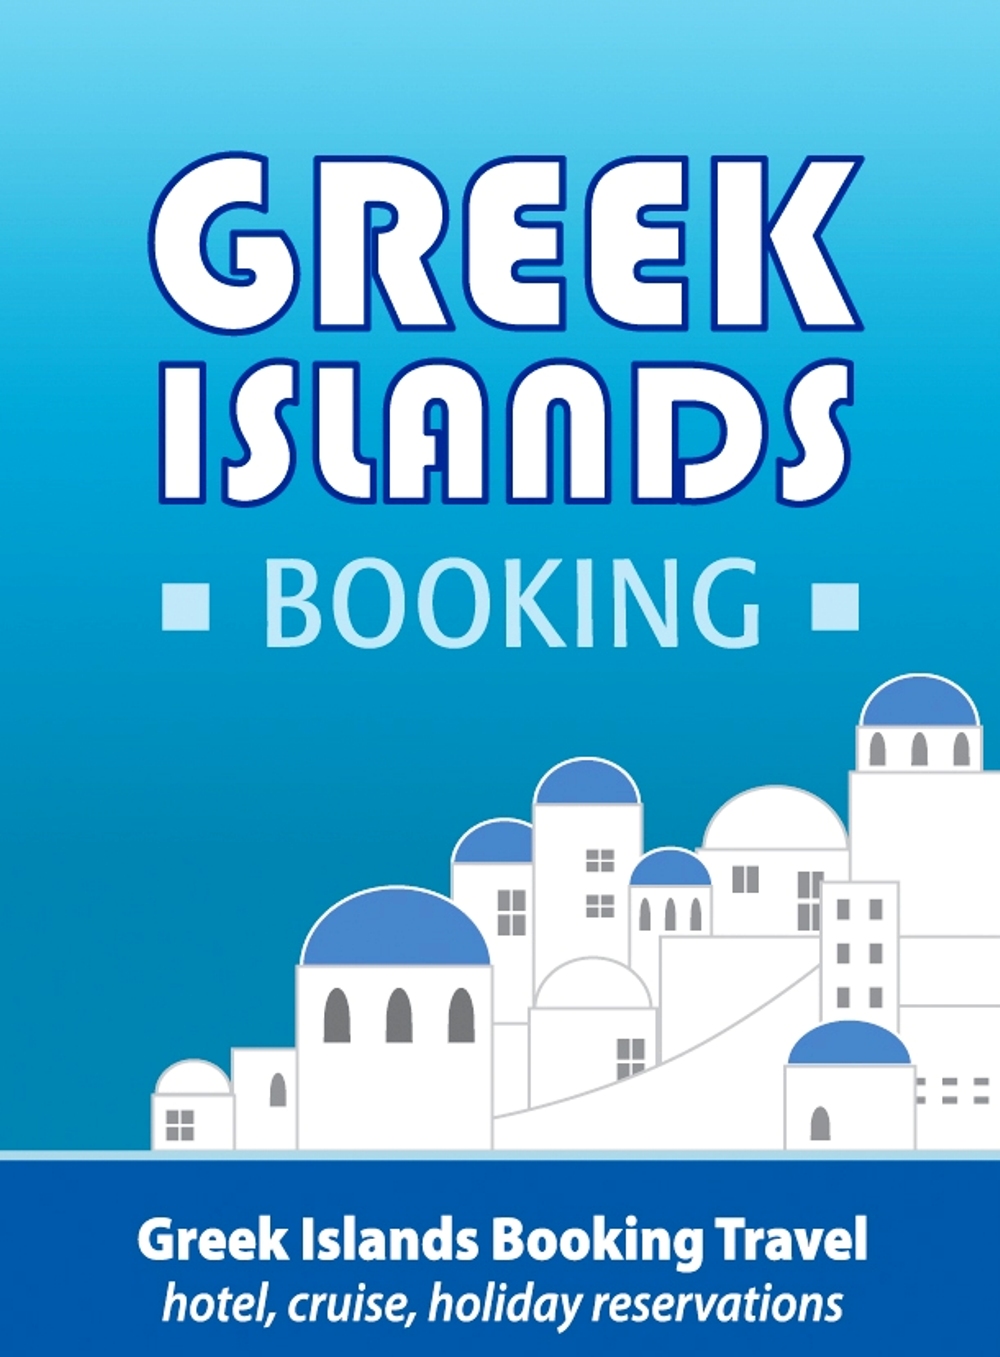 (c) Greekislandsbooking.com